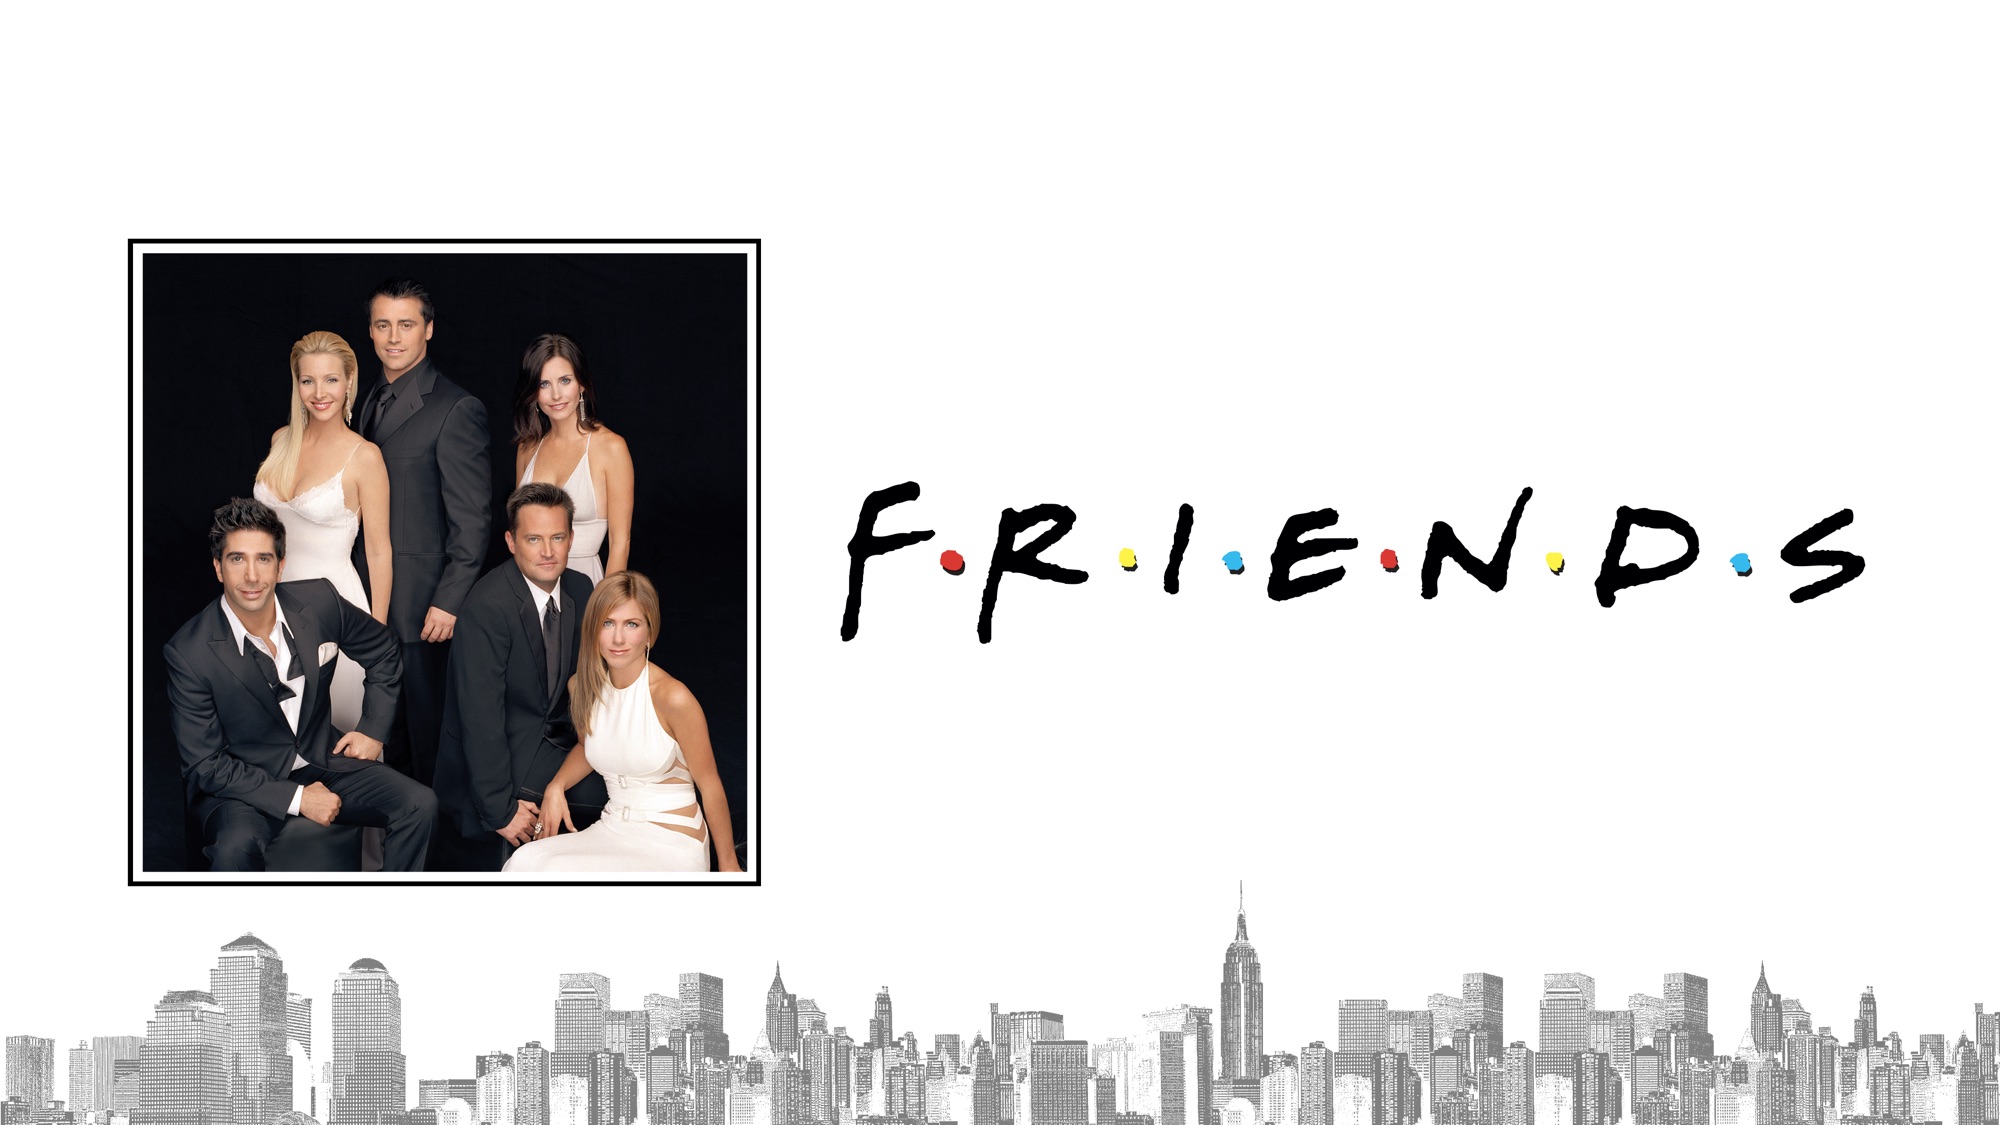 TV Show Friends HD Wallpaper | Background Image